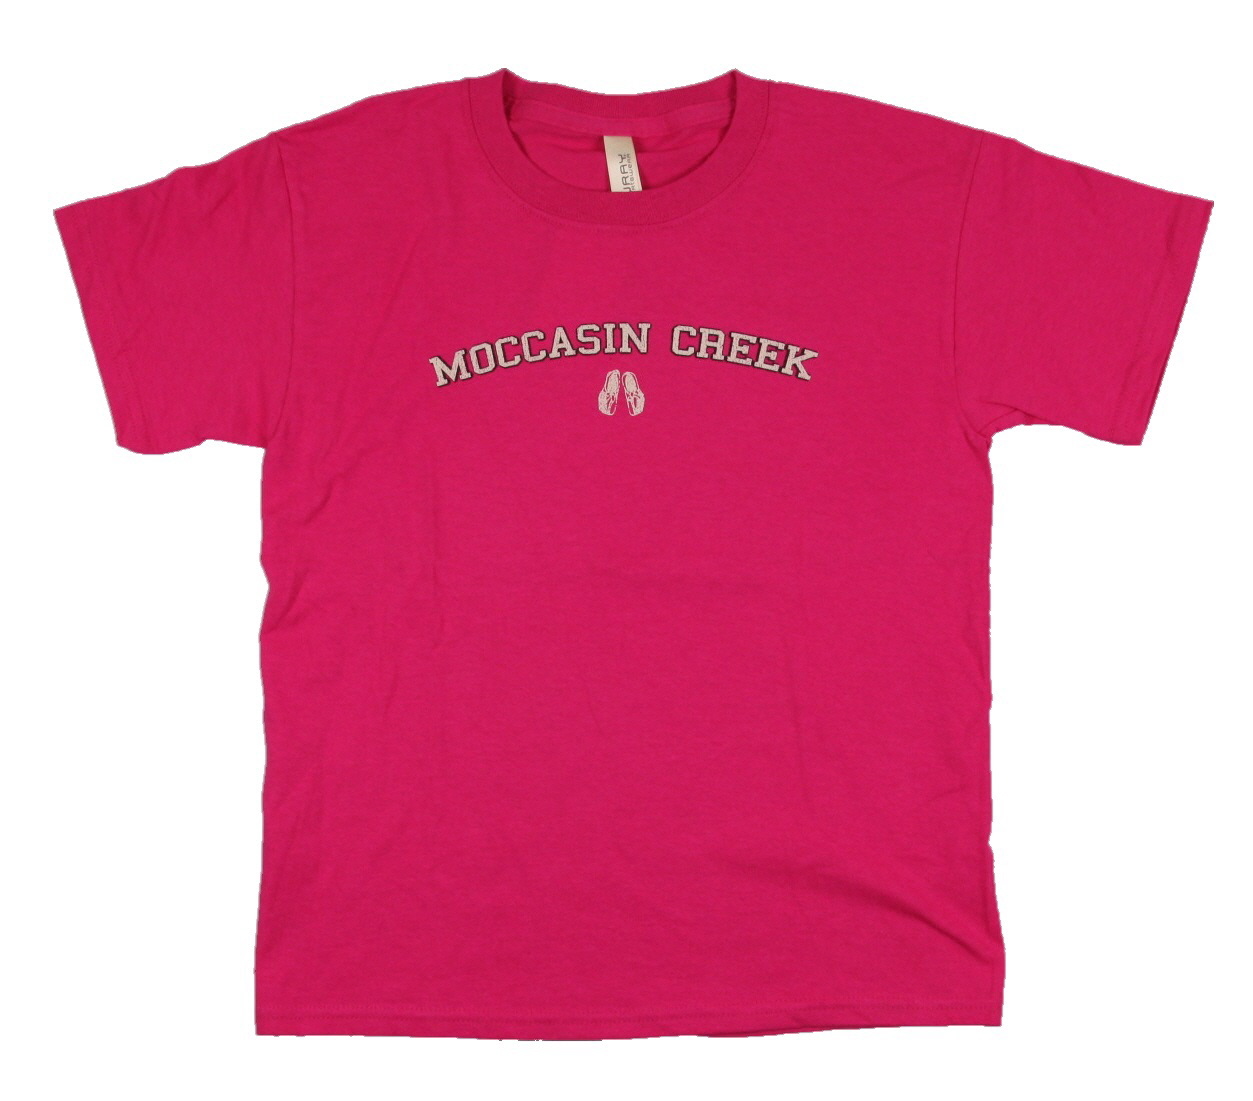 NEW Girls Ouray Sportswear T-Shirt Moccasin Creek Hot Pink sz Large | eBay